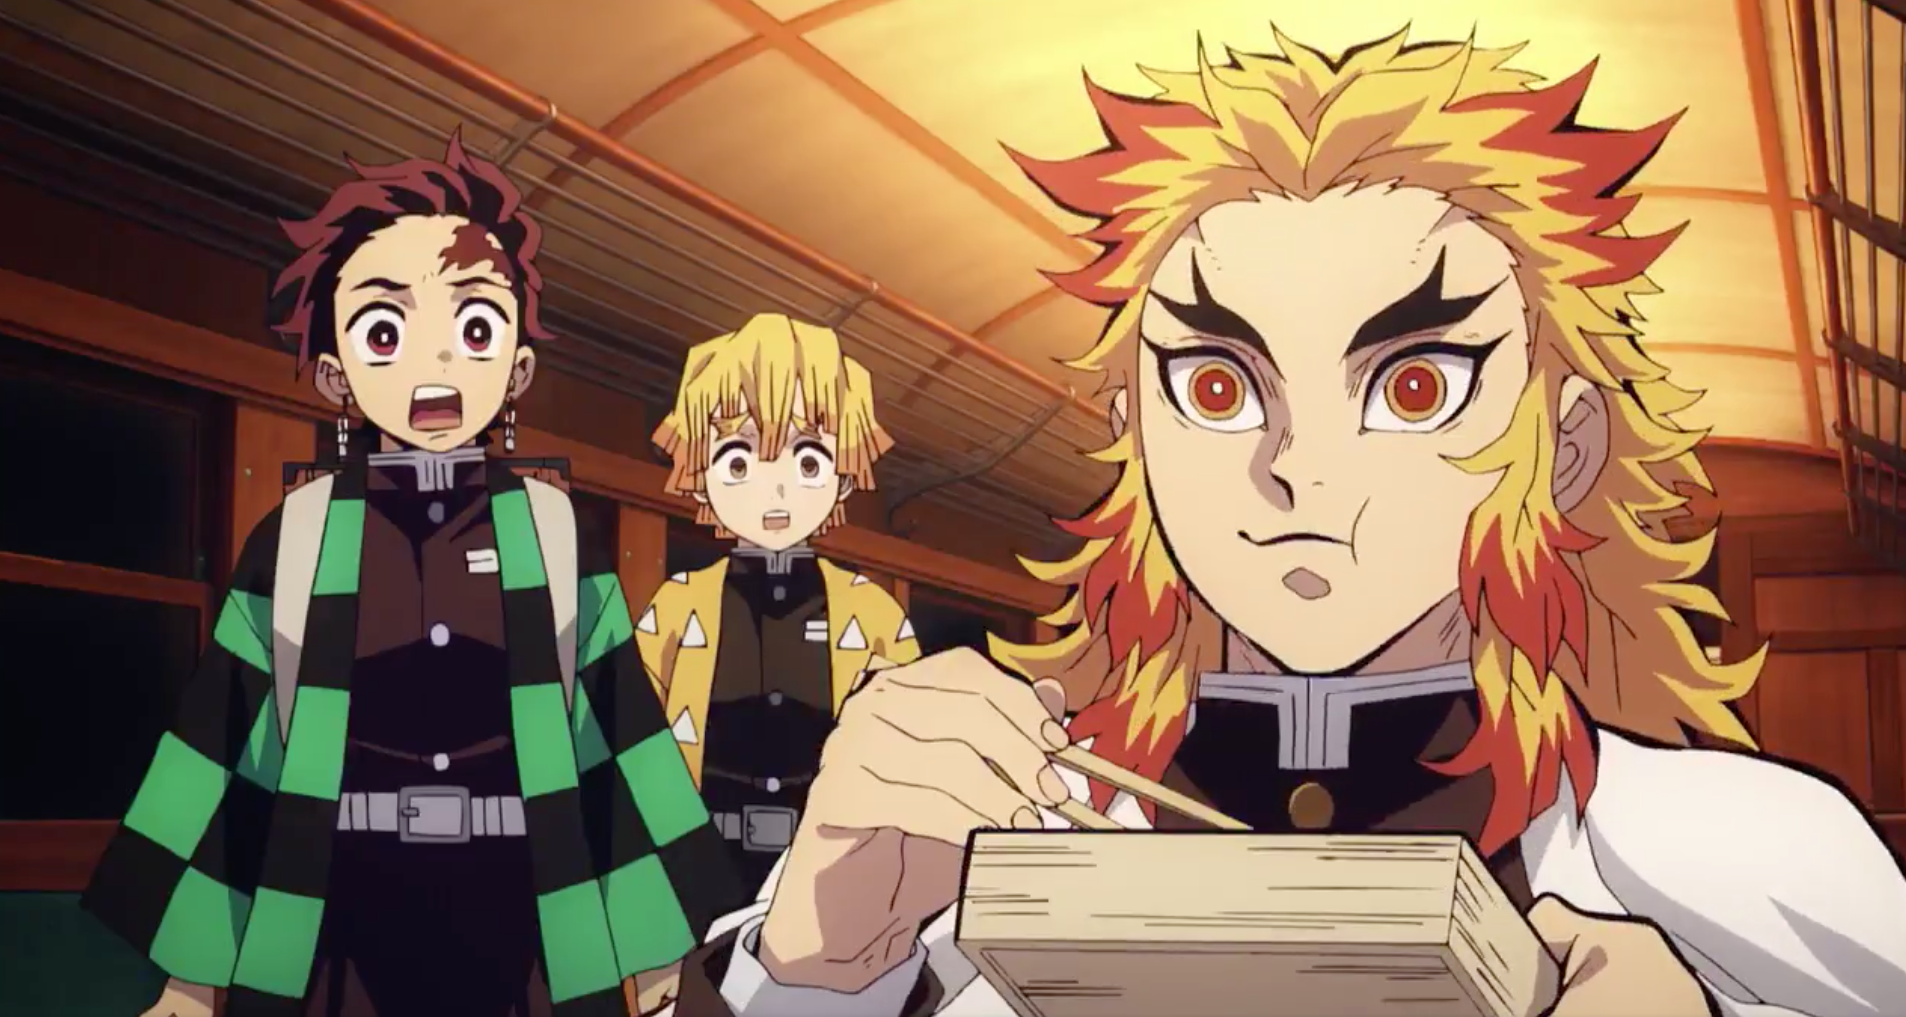 Tanjiro and Zenitsu standing behind Rengoku as he enjoys his favorite food-- sweet potatoes!